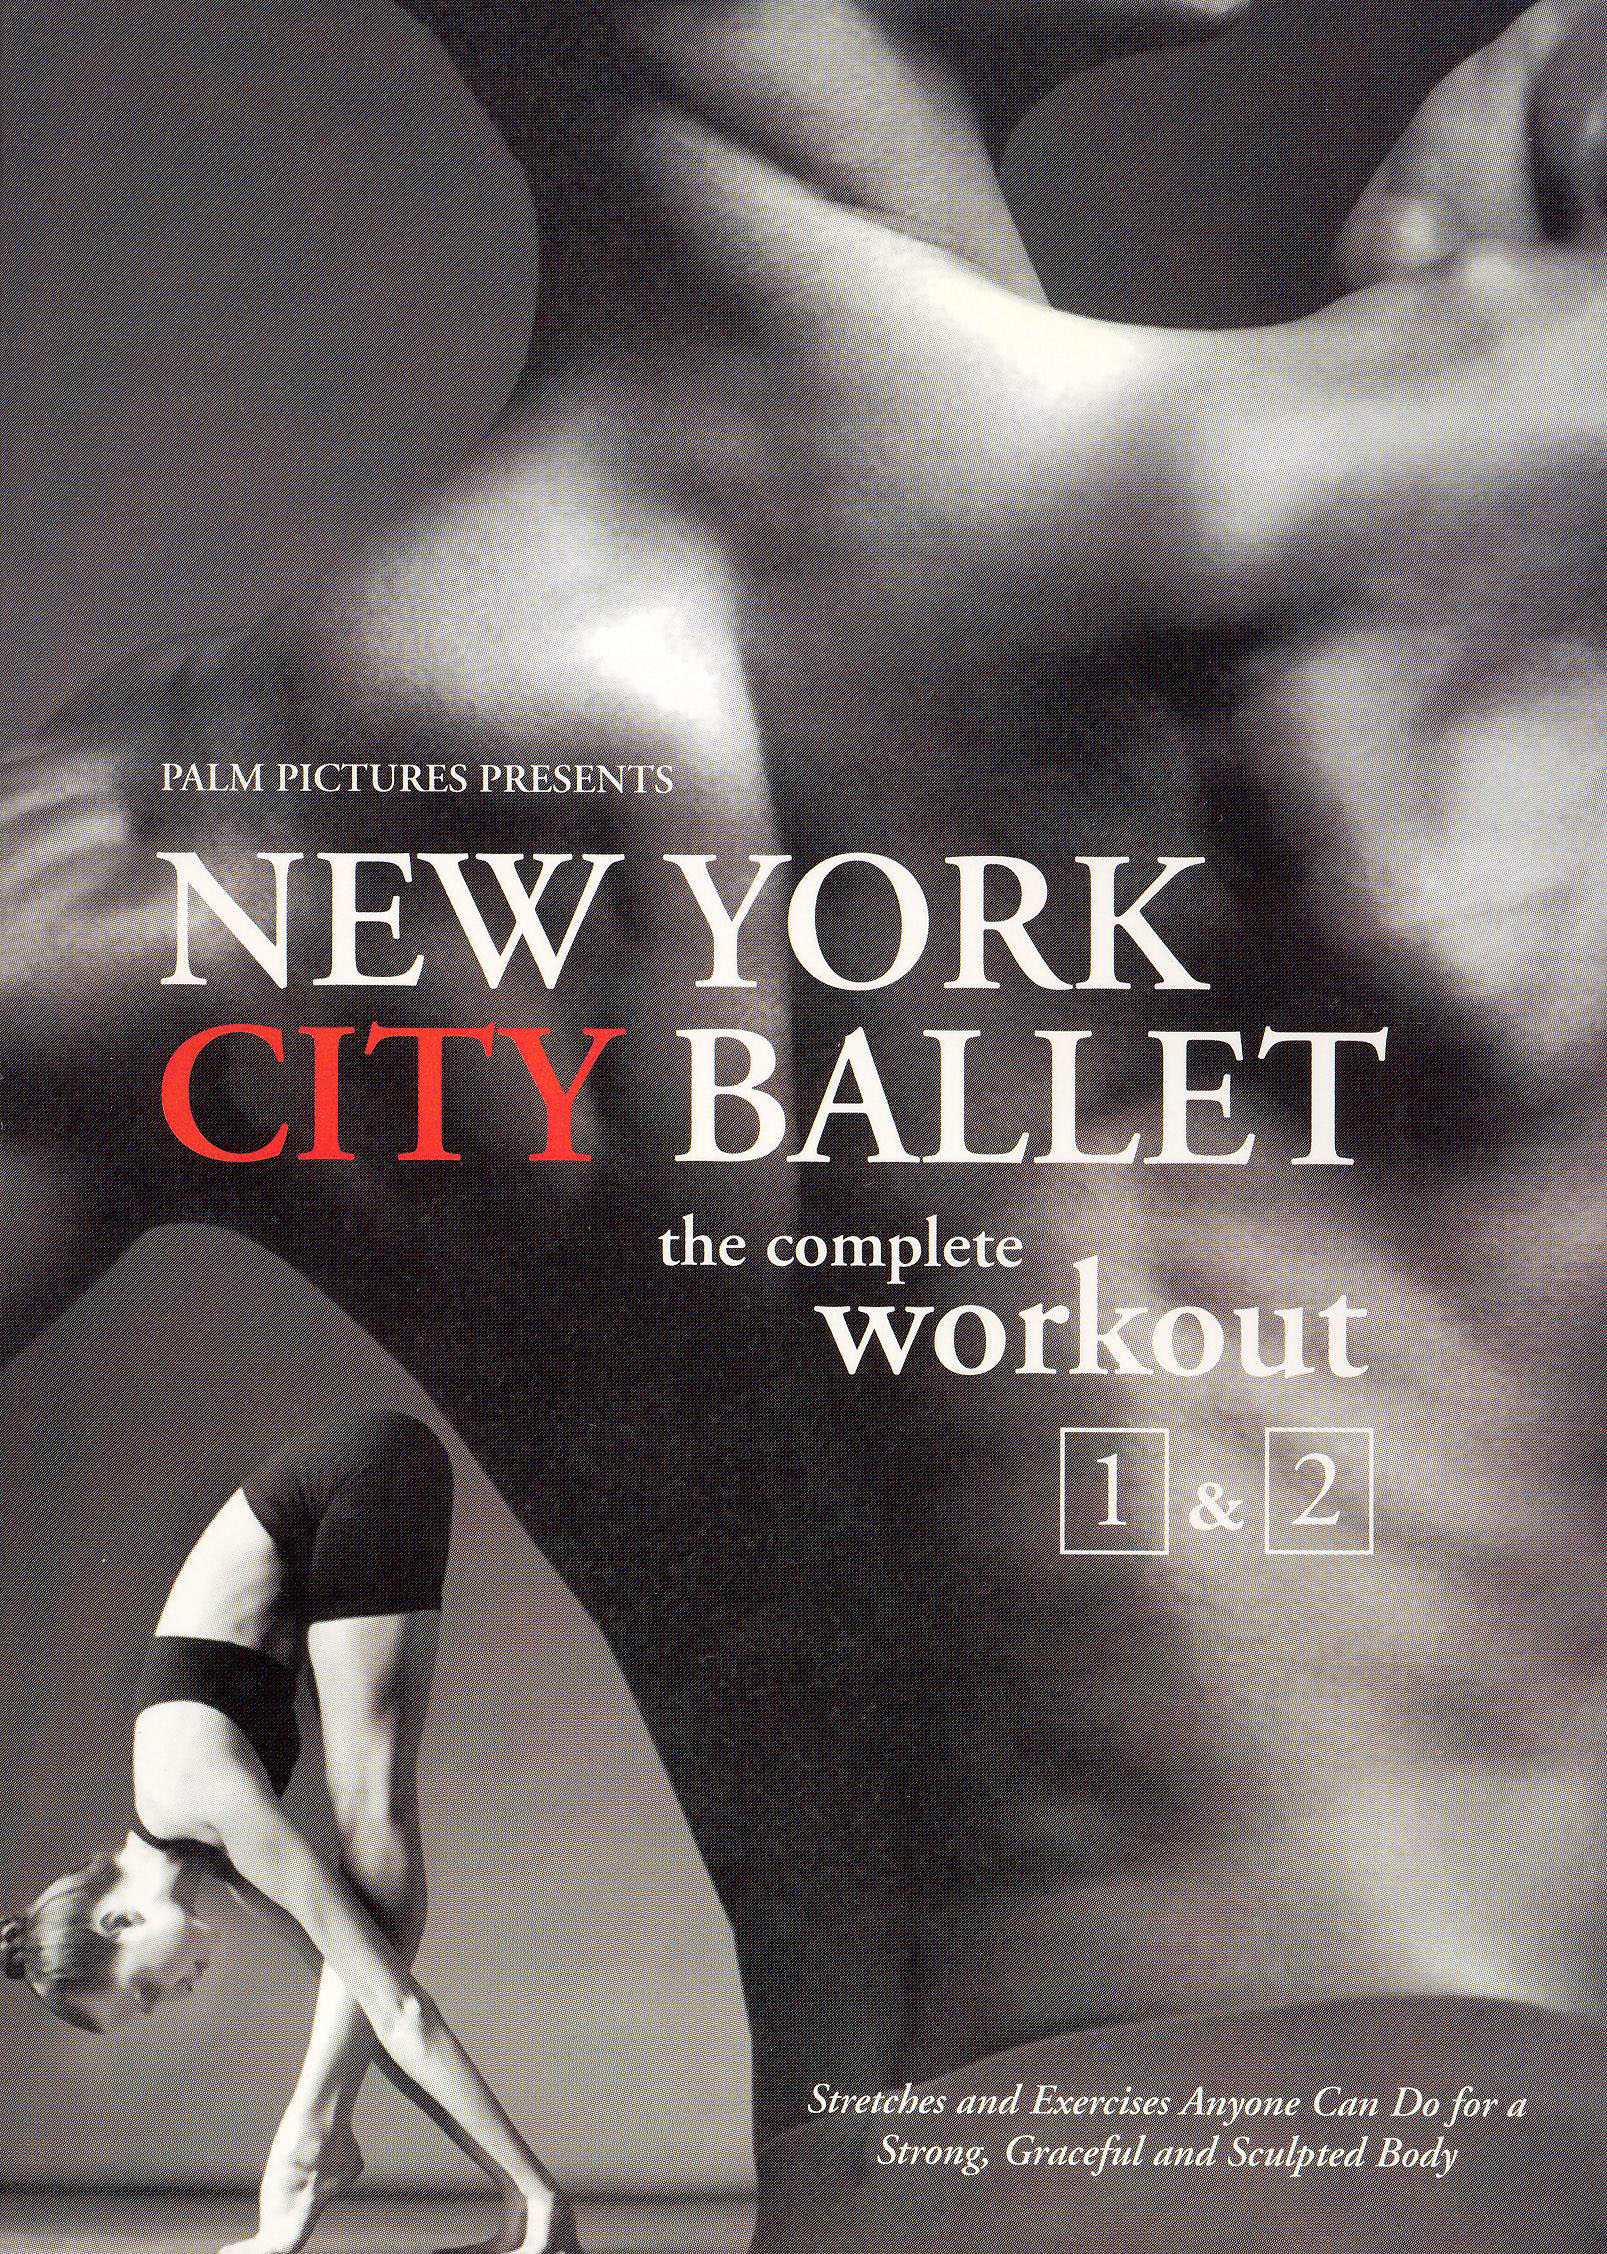 Tendu Toning® # 1 where ballet meets fitness DVD Combo Kit